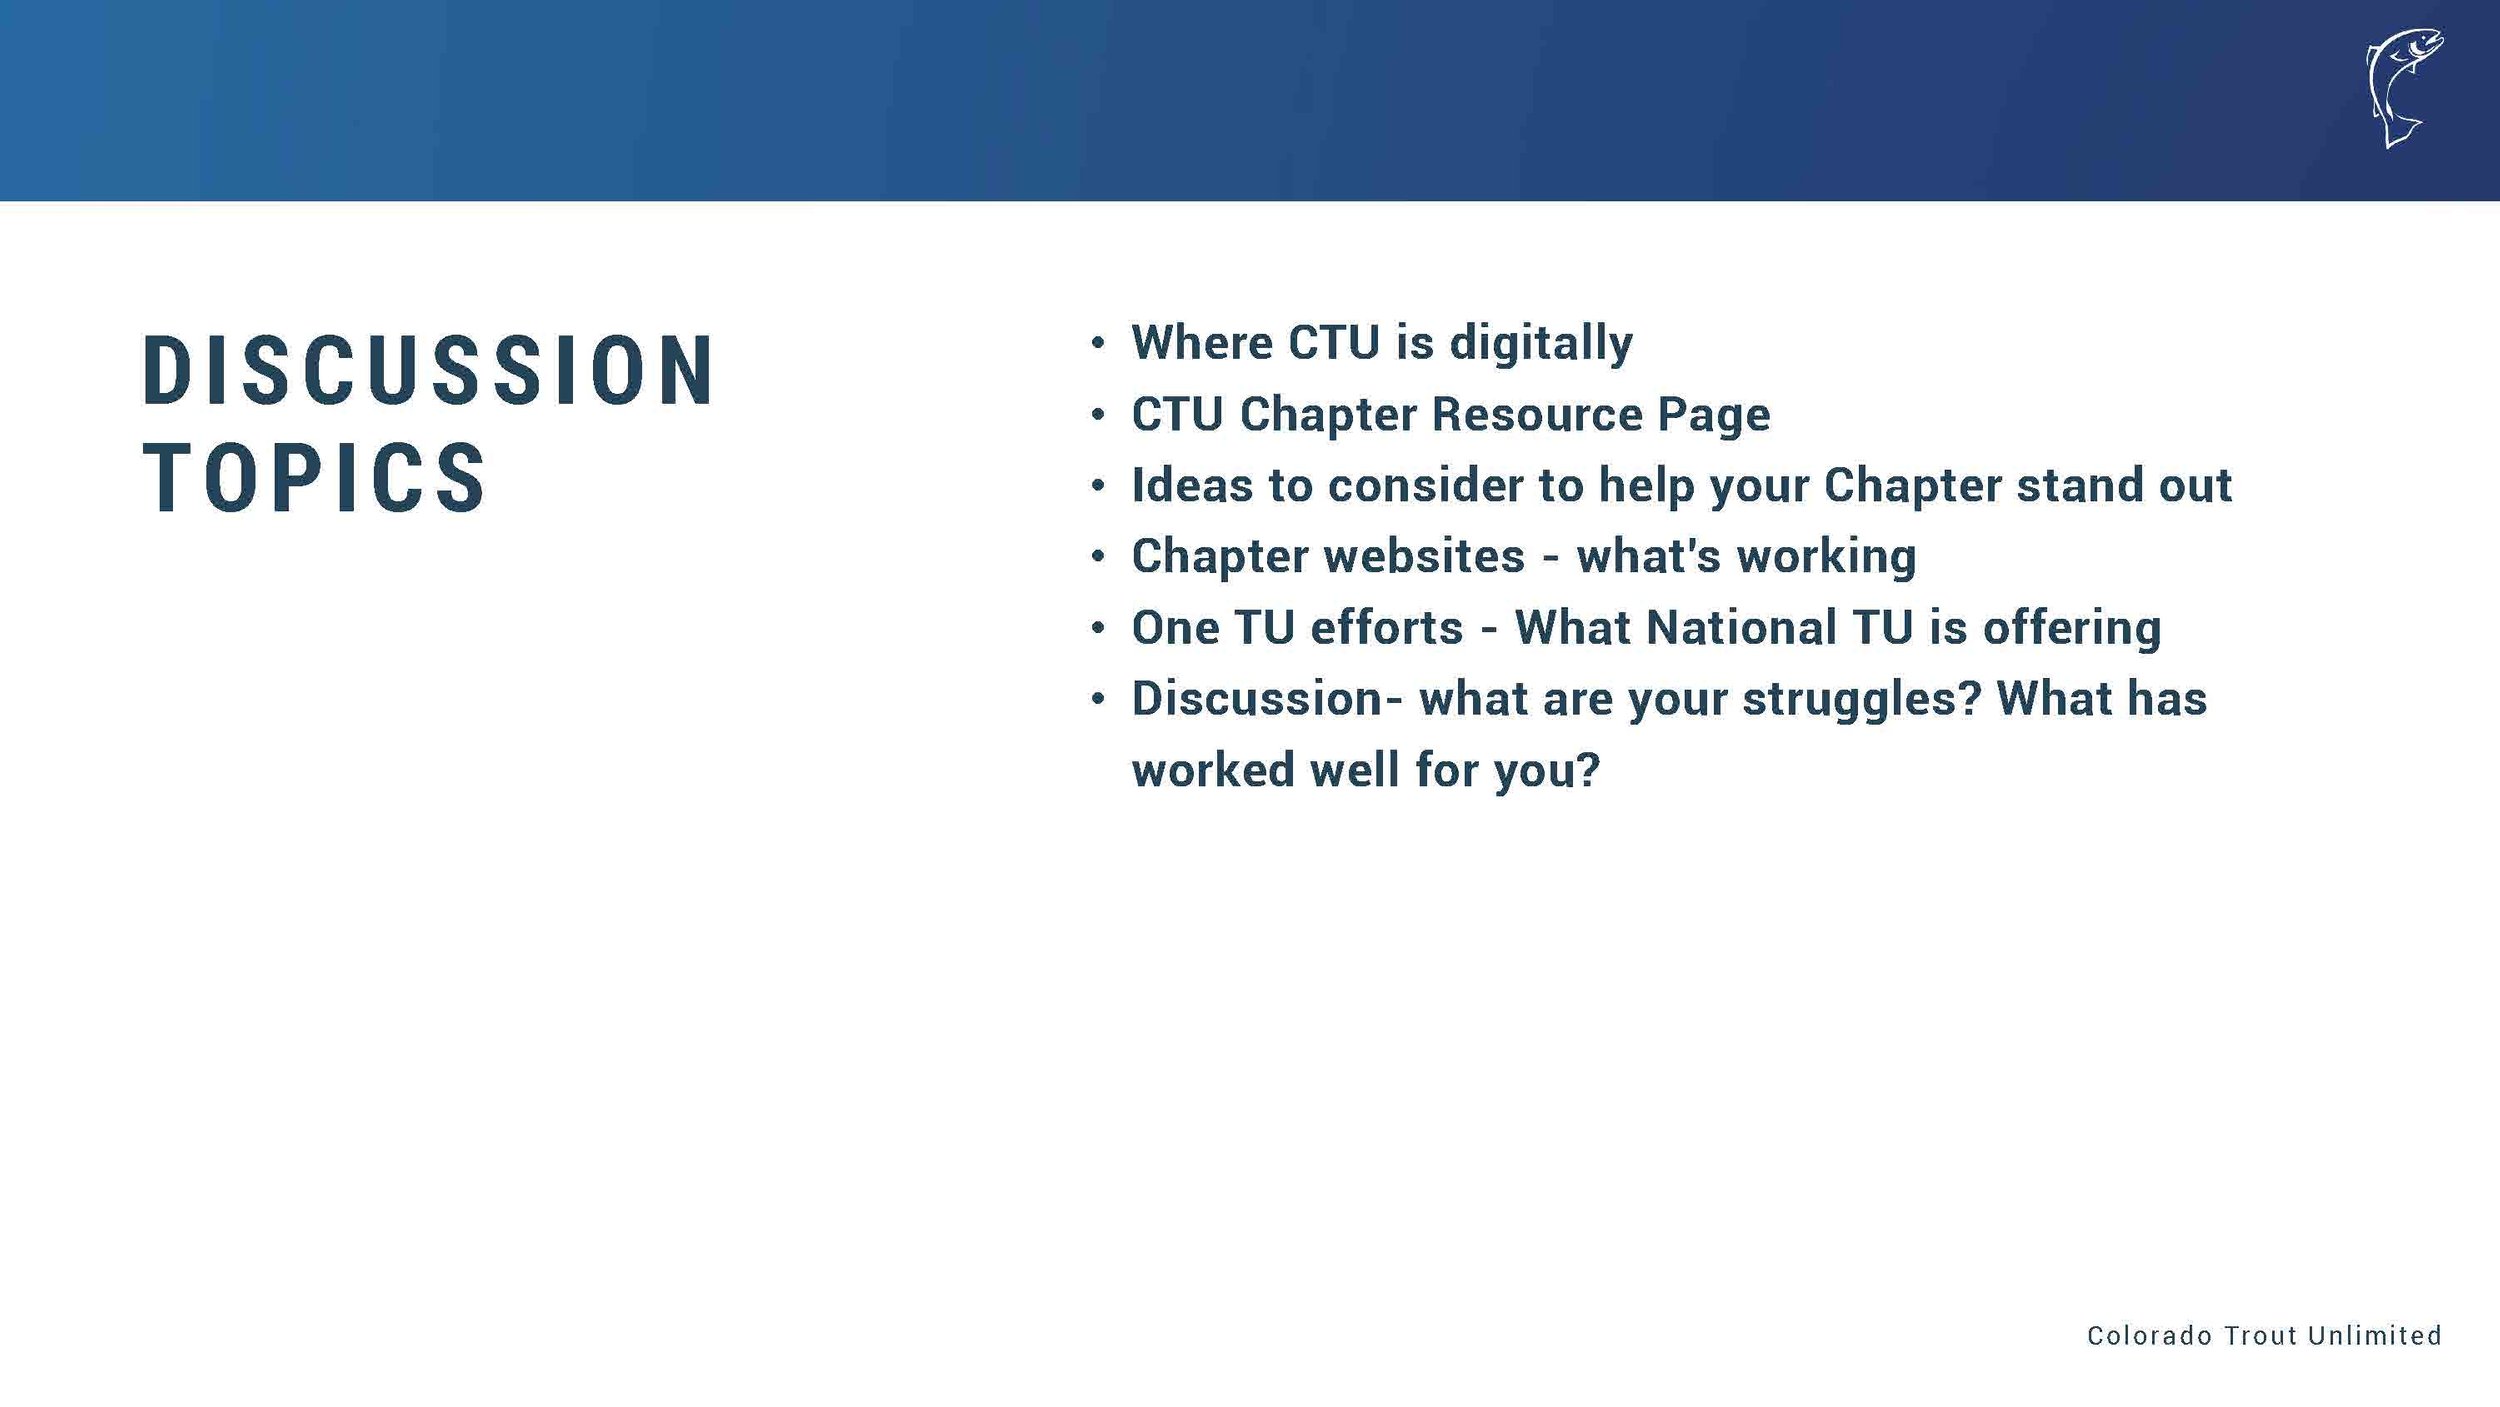 DigitalEngagementOct2021-Board Presentation_Page_02.jpg